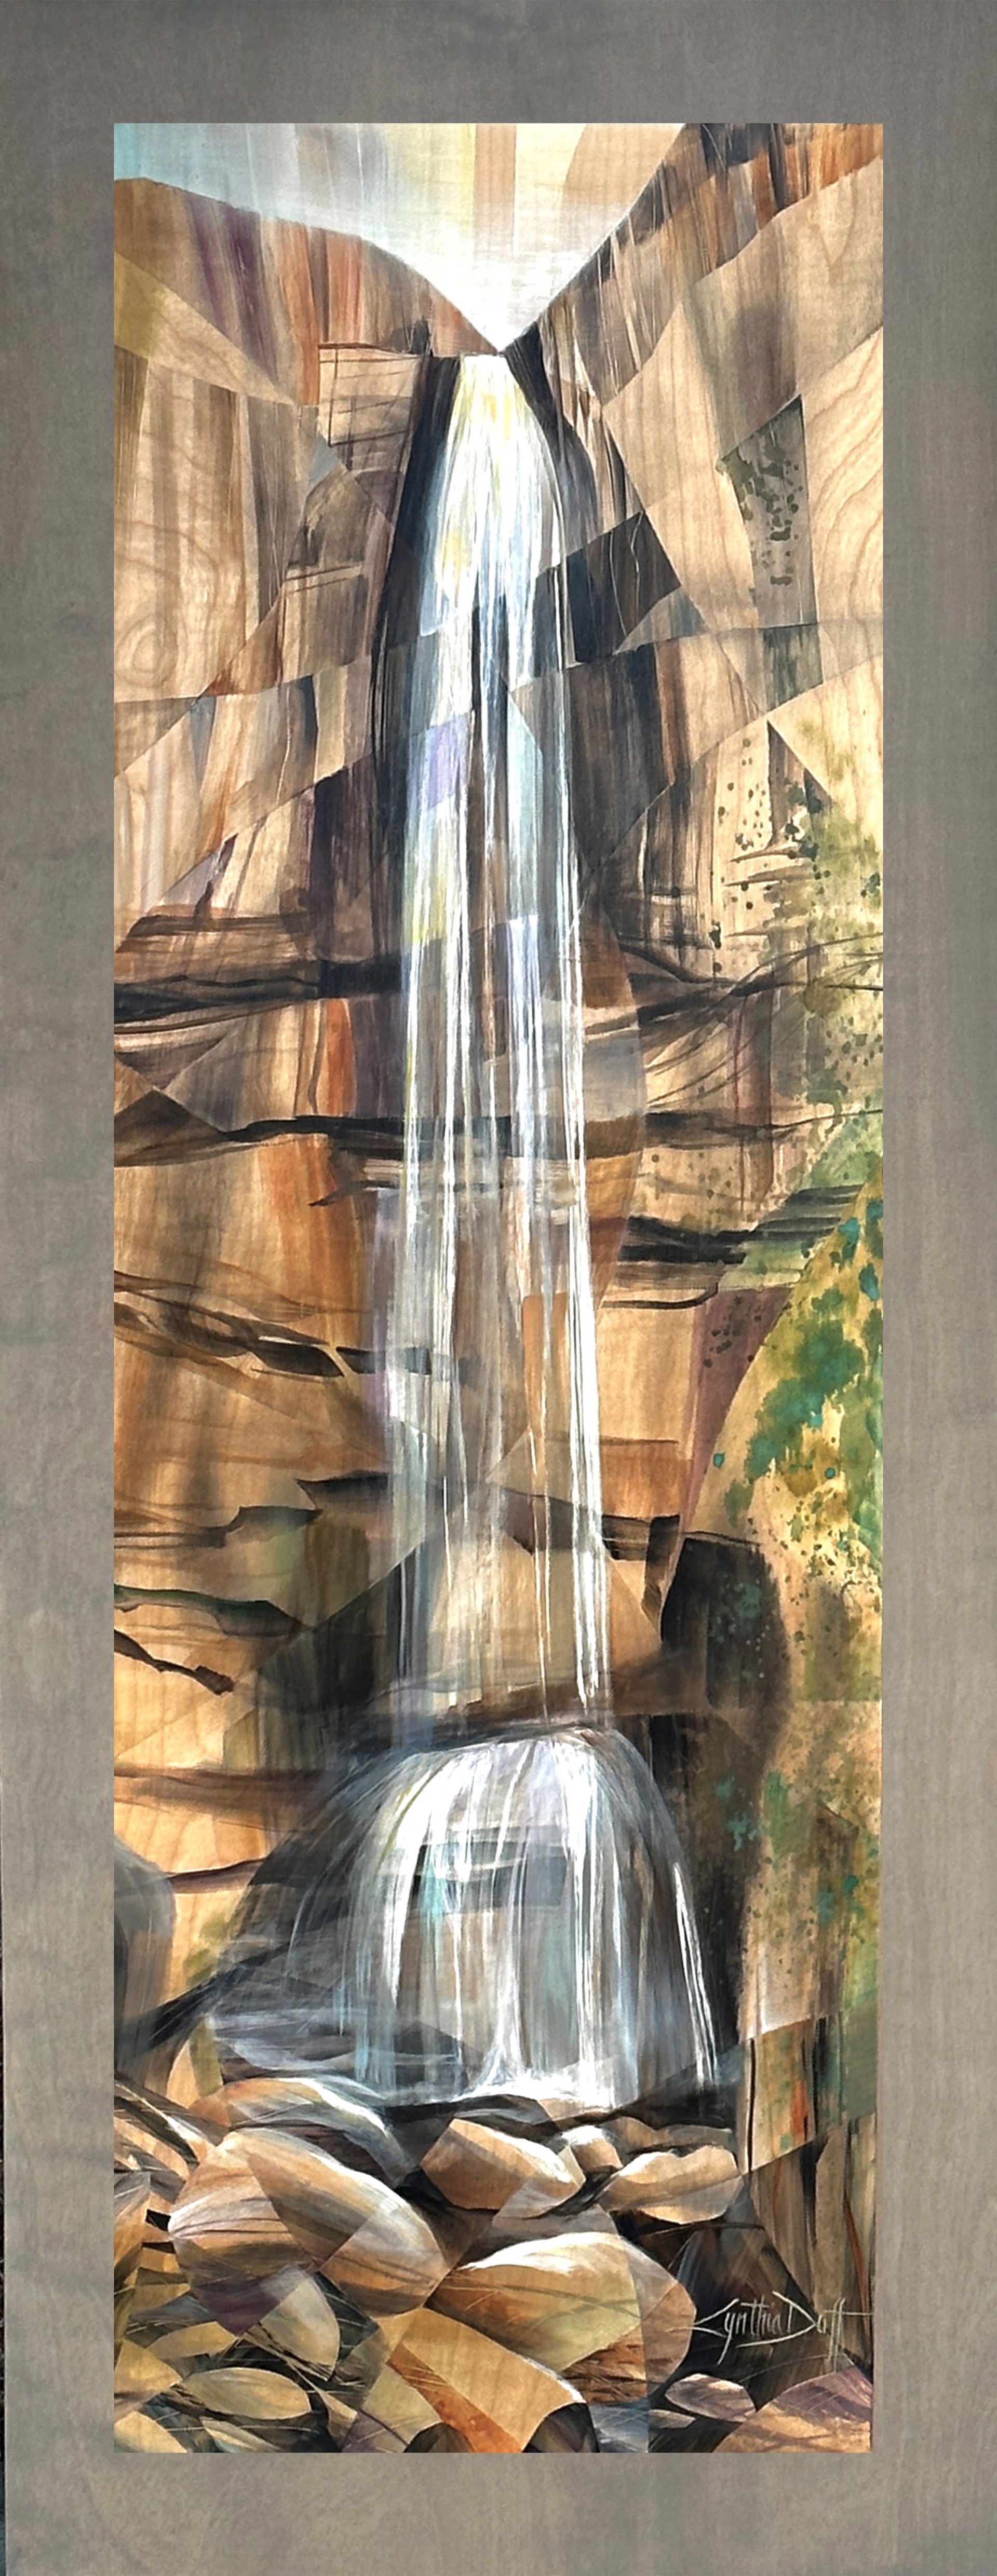 Chiva Falls by Cynthia Duff